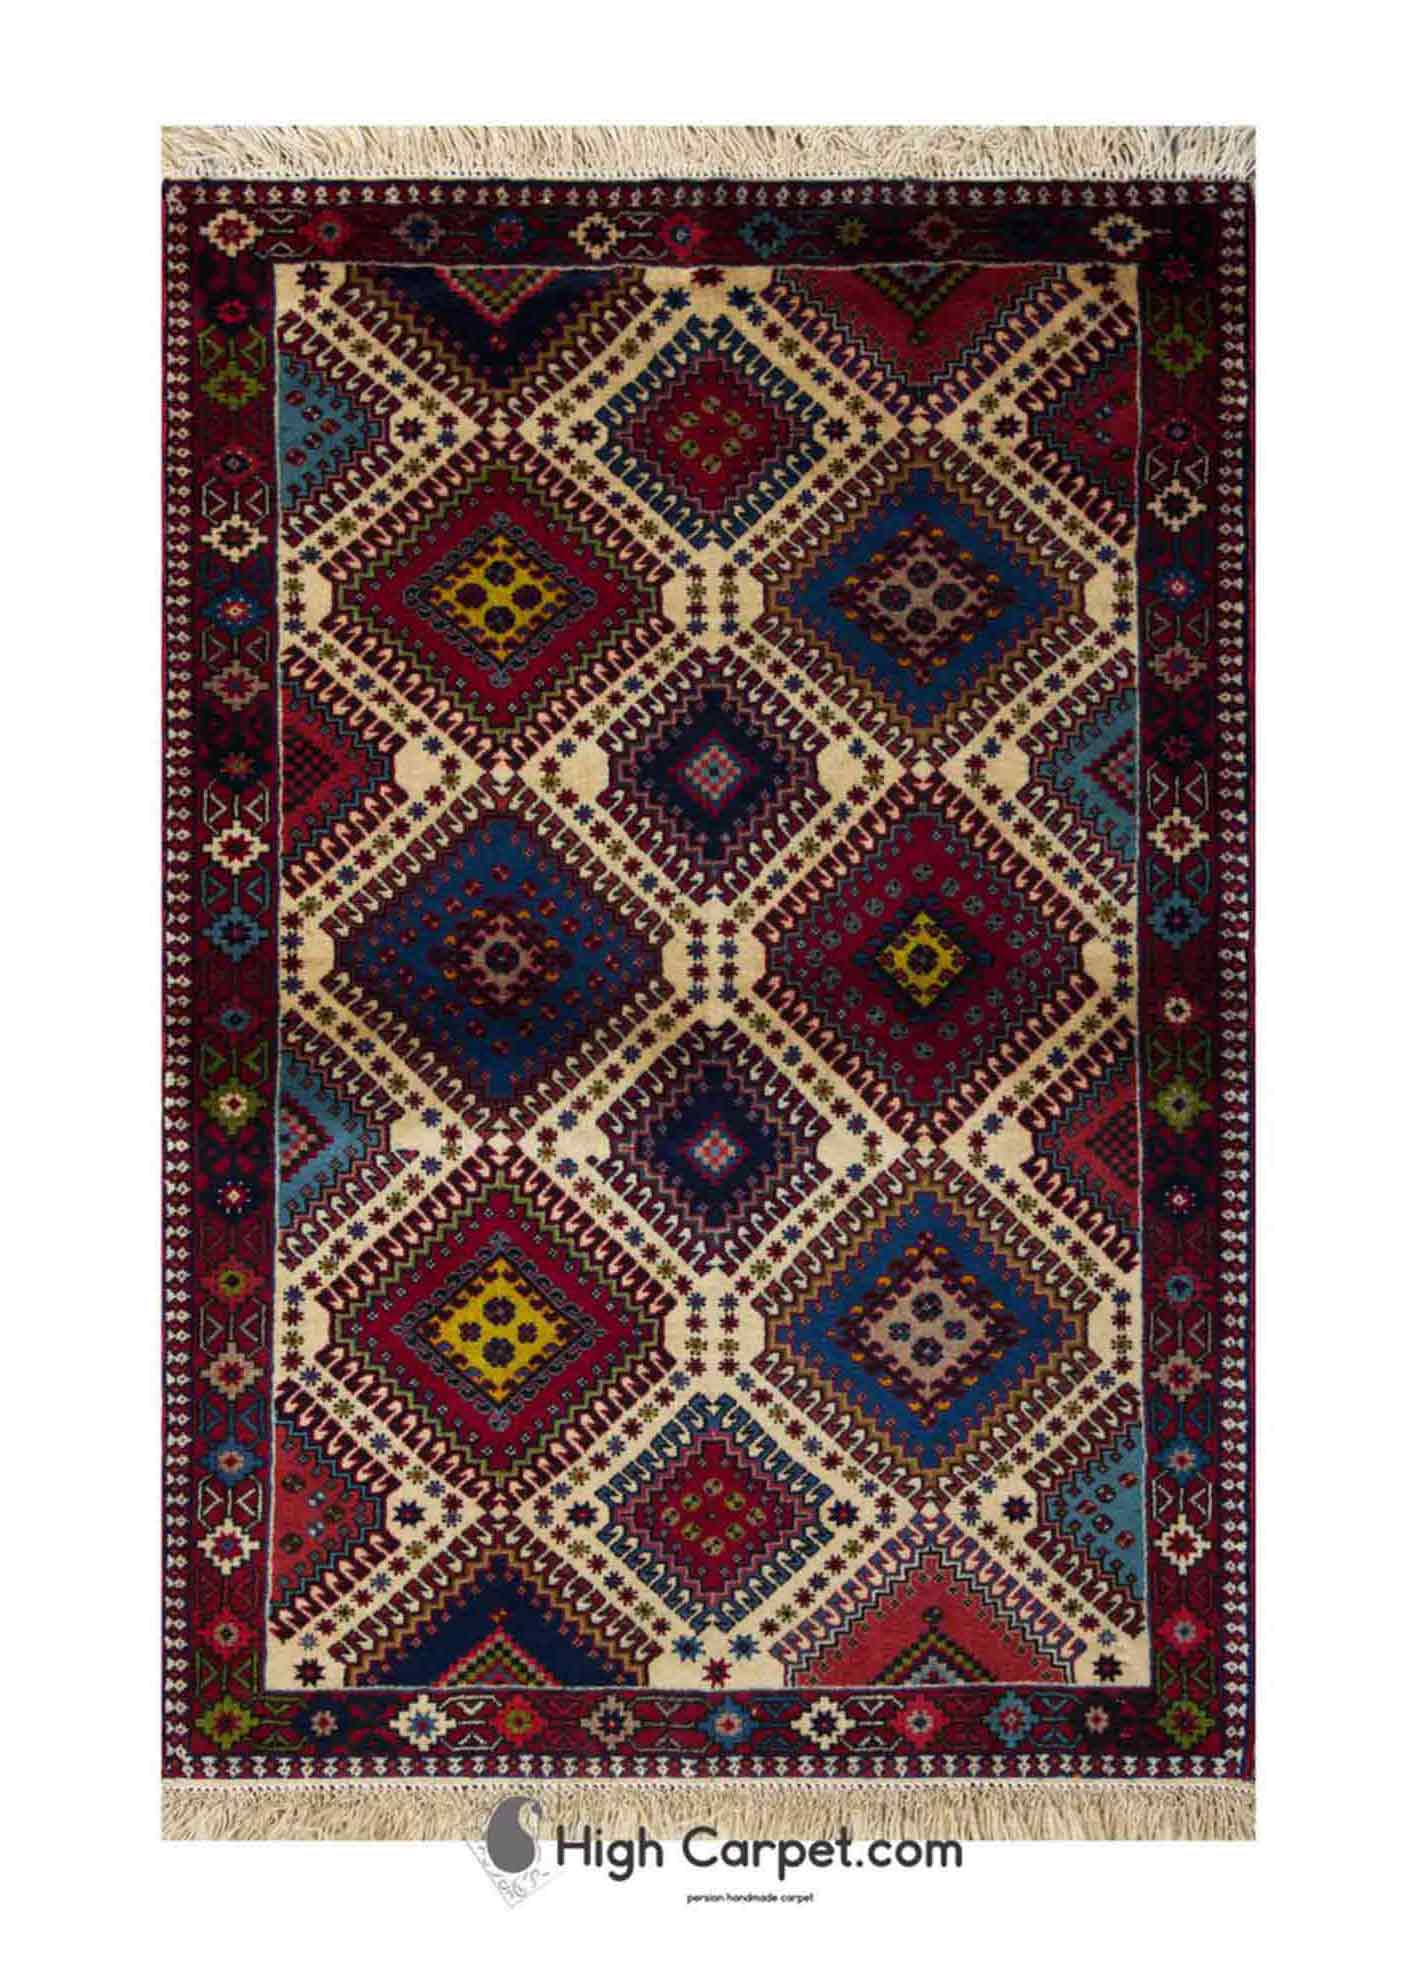 Handmade 4'x 6' Polychrome Persian Tribal Wool Rug 0242